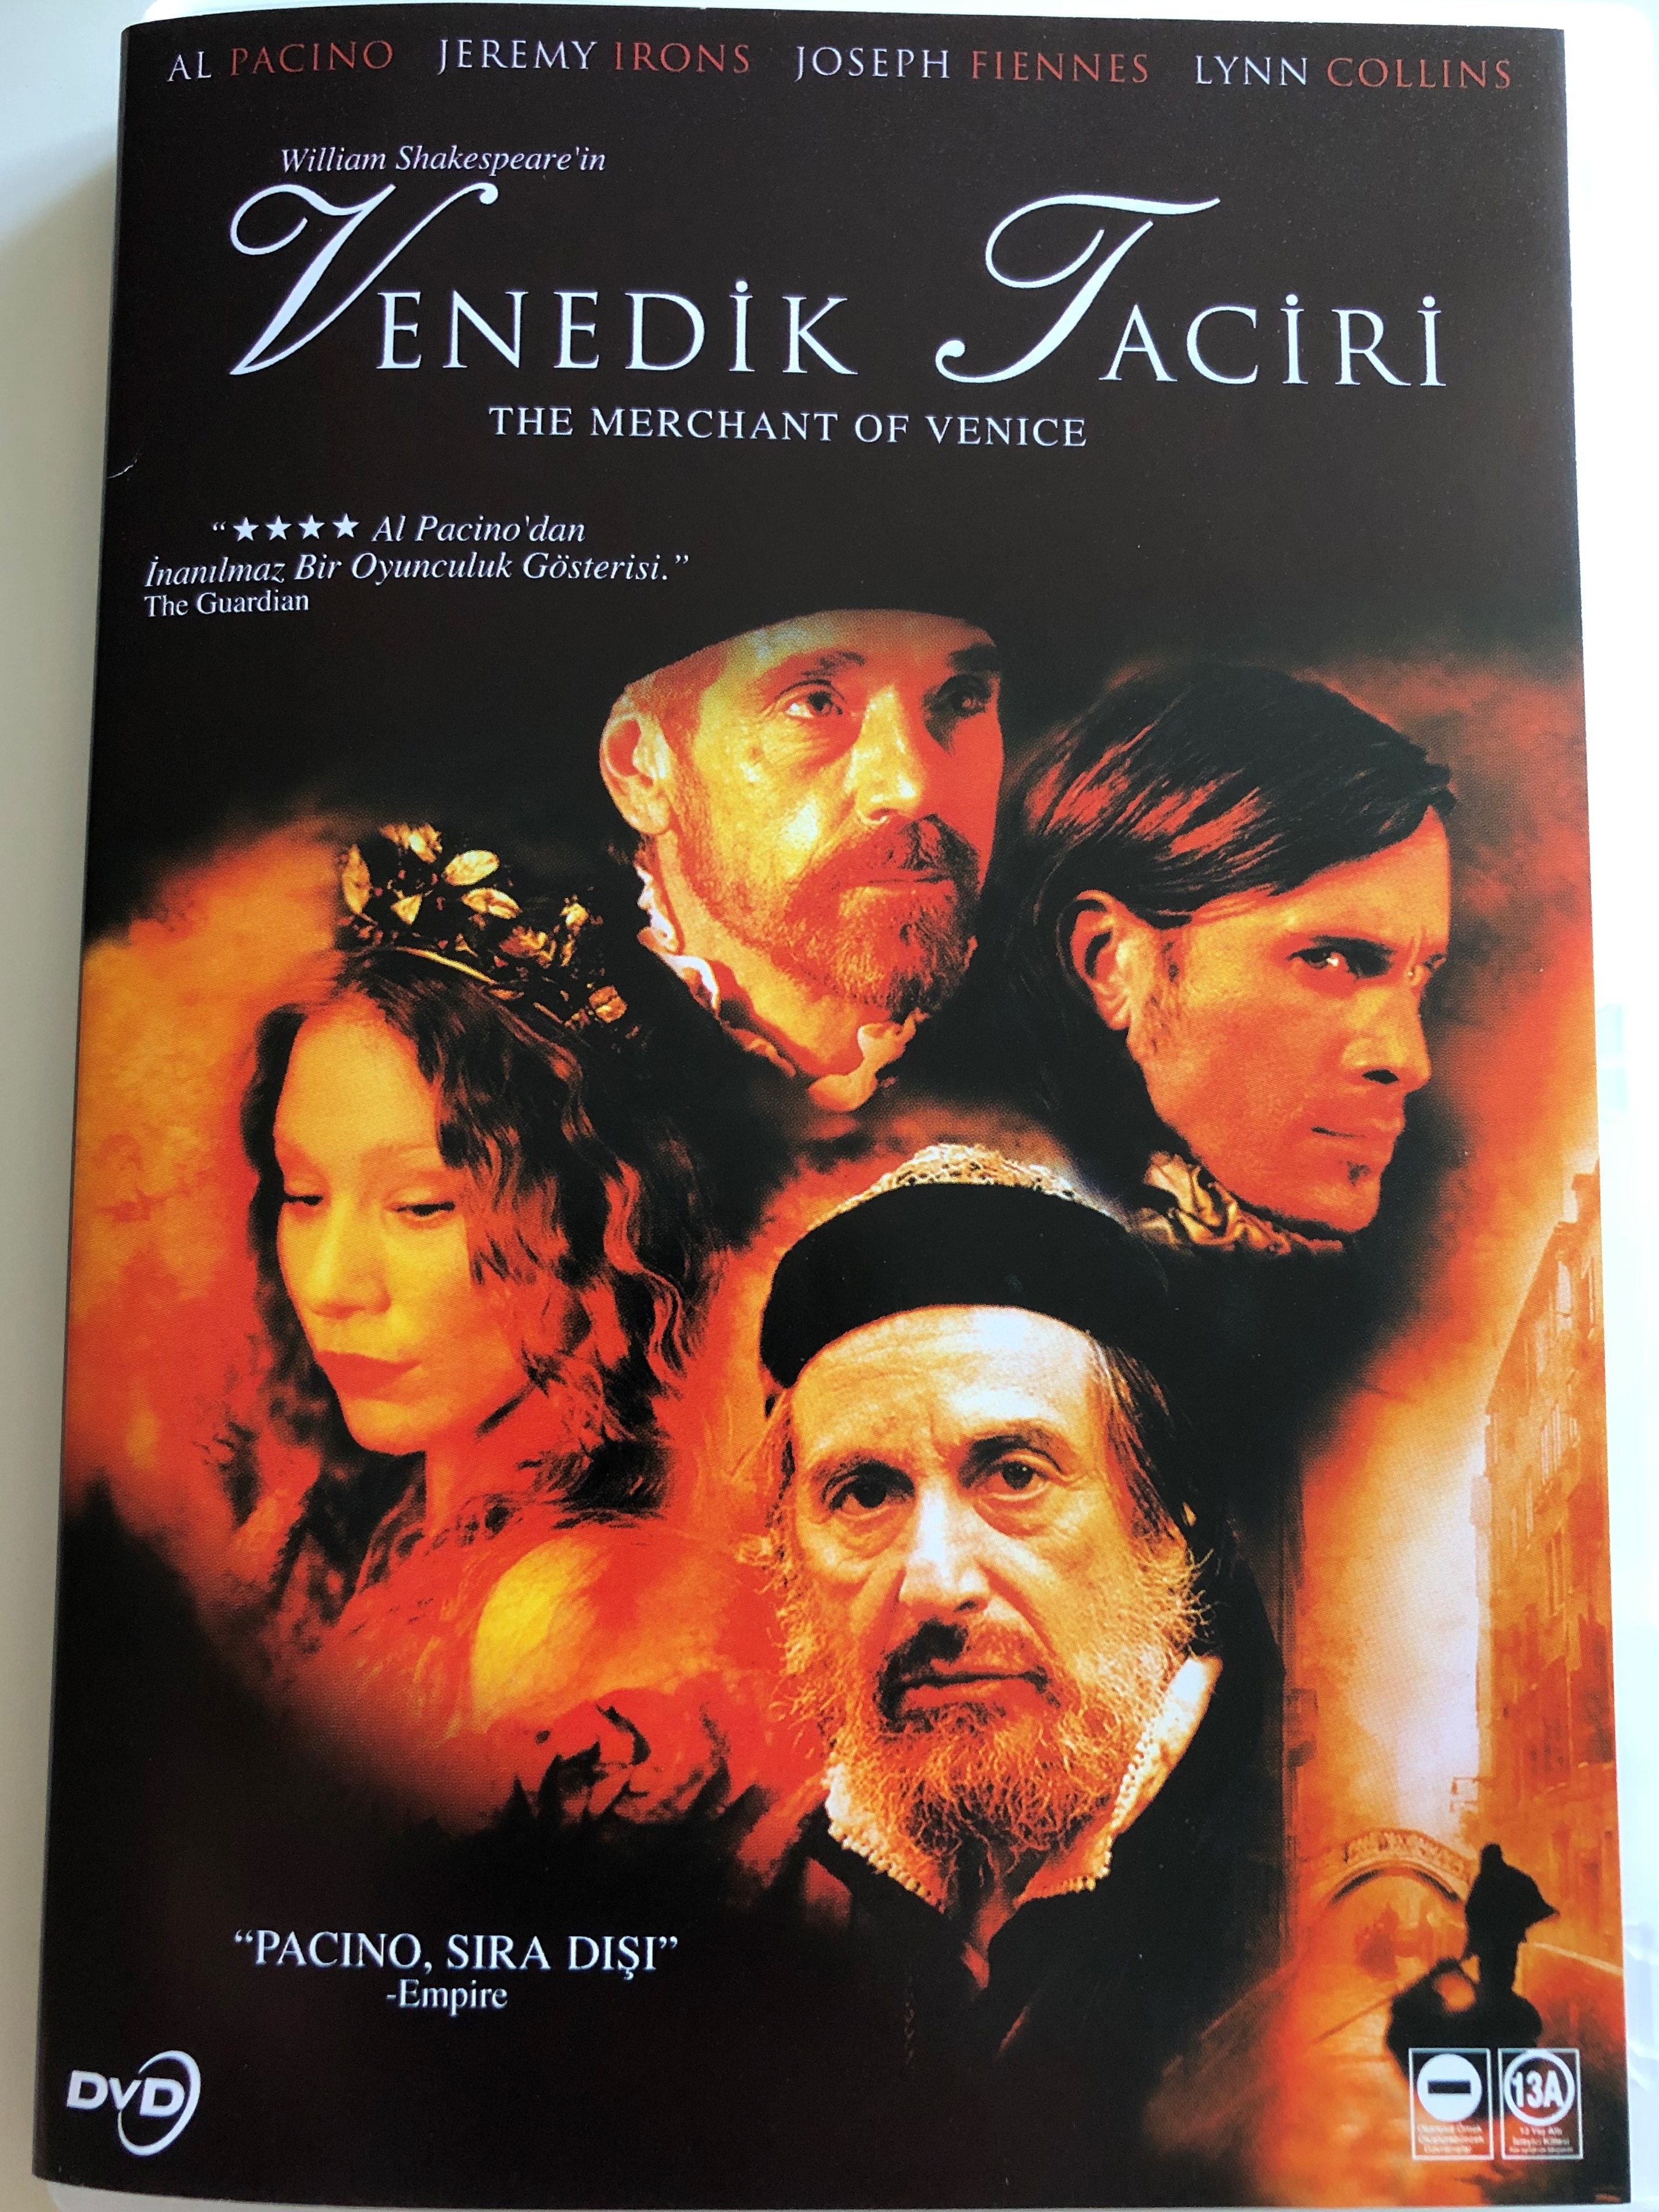 william-shakespeare-s-the-merchant-of-venice-dvd-2004-venedik-taciri-directed-by-michael-radford-starring-al-pacino-jeremy-irons-joseph-fiennes-lynn-collins-1-.jpg